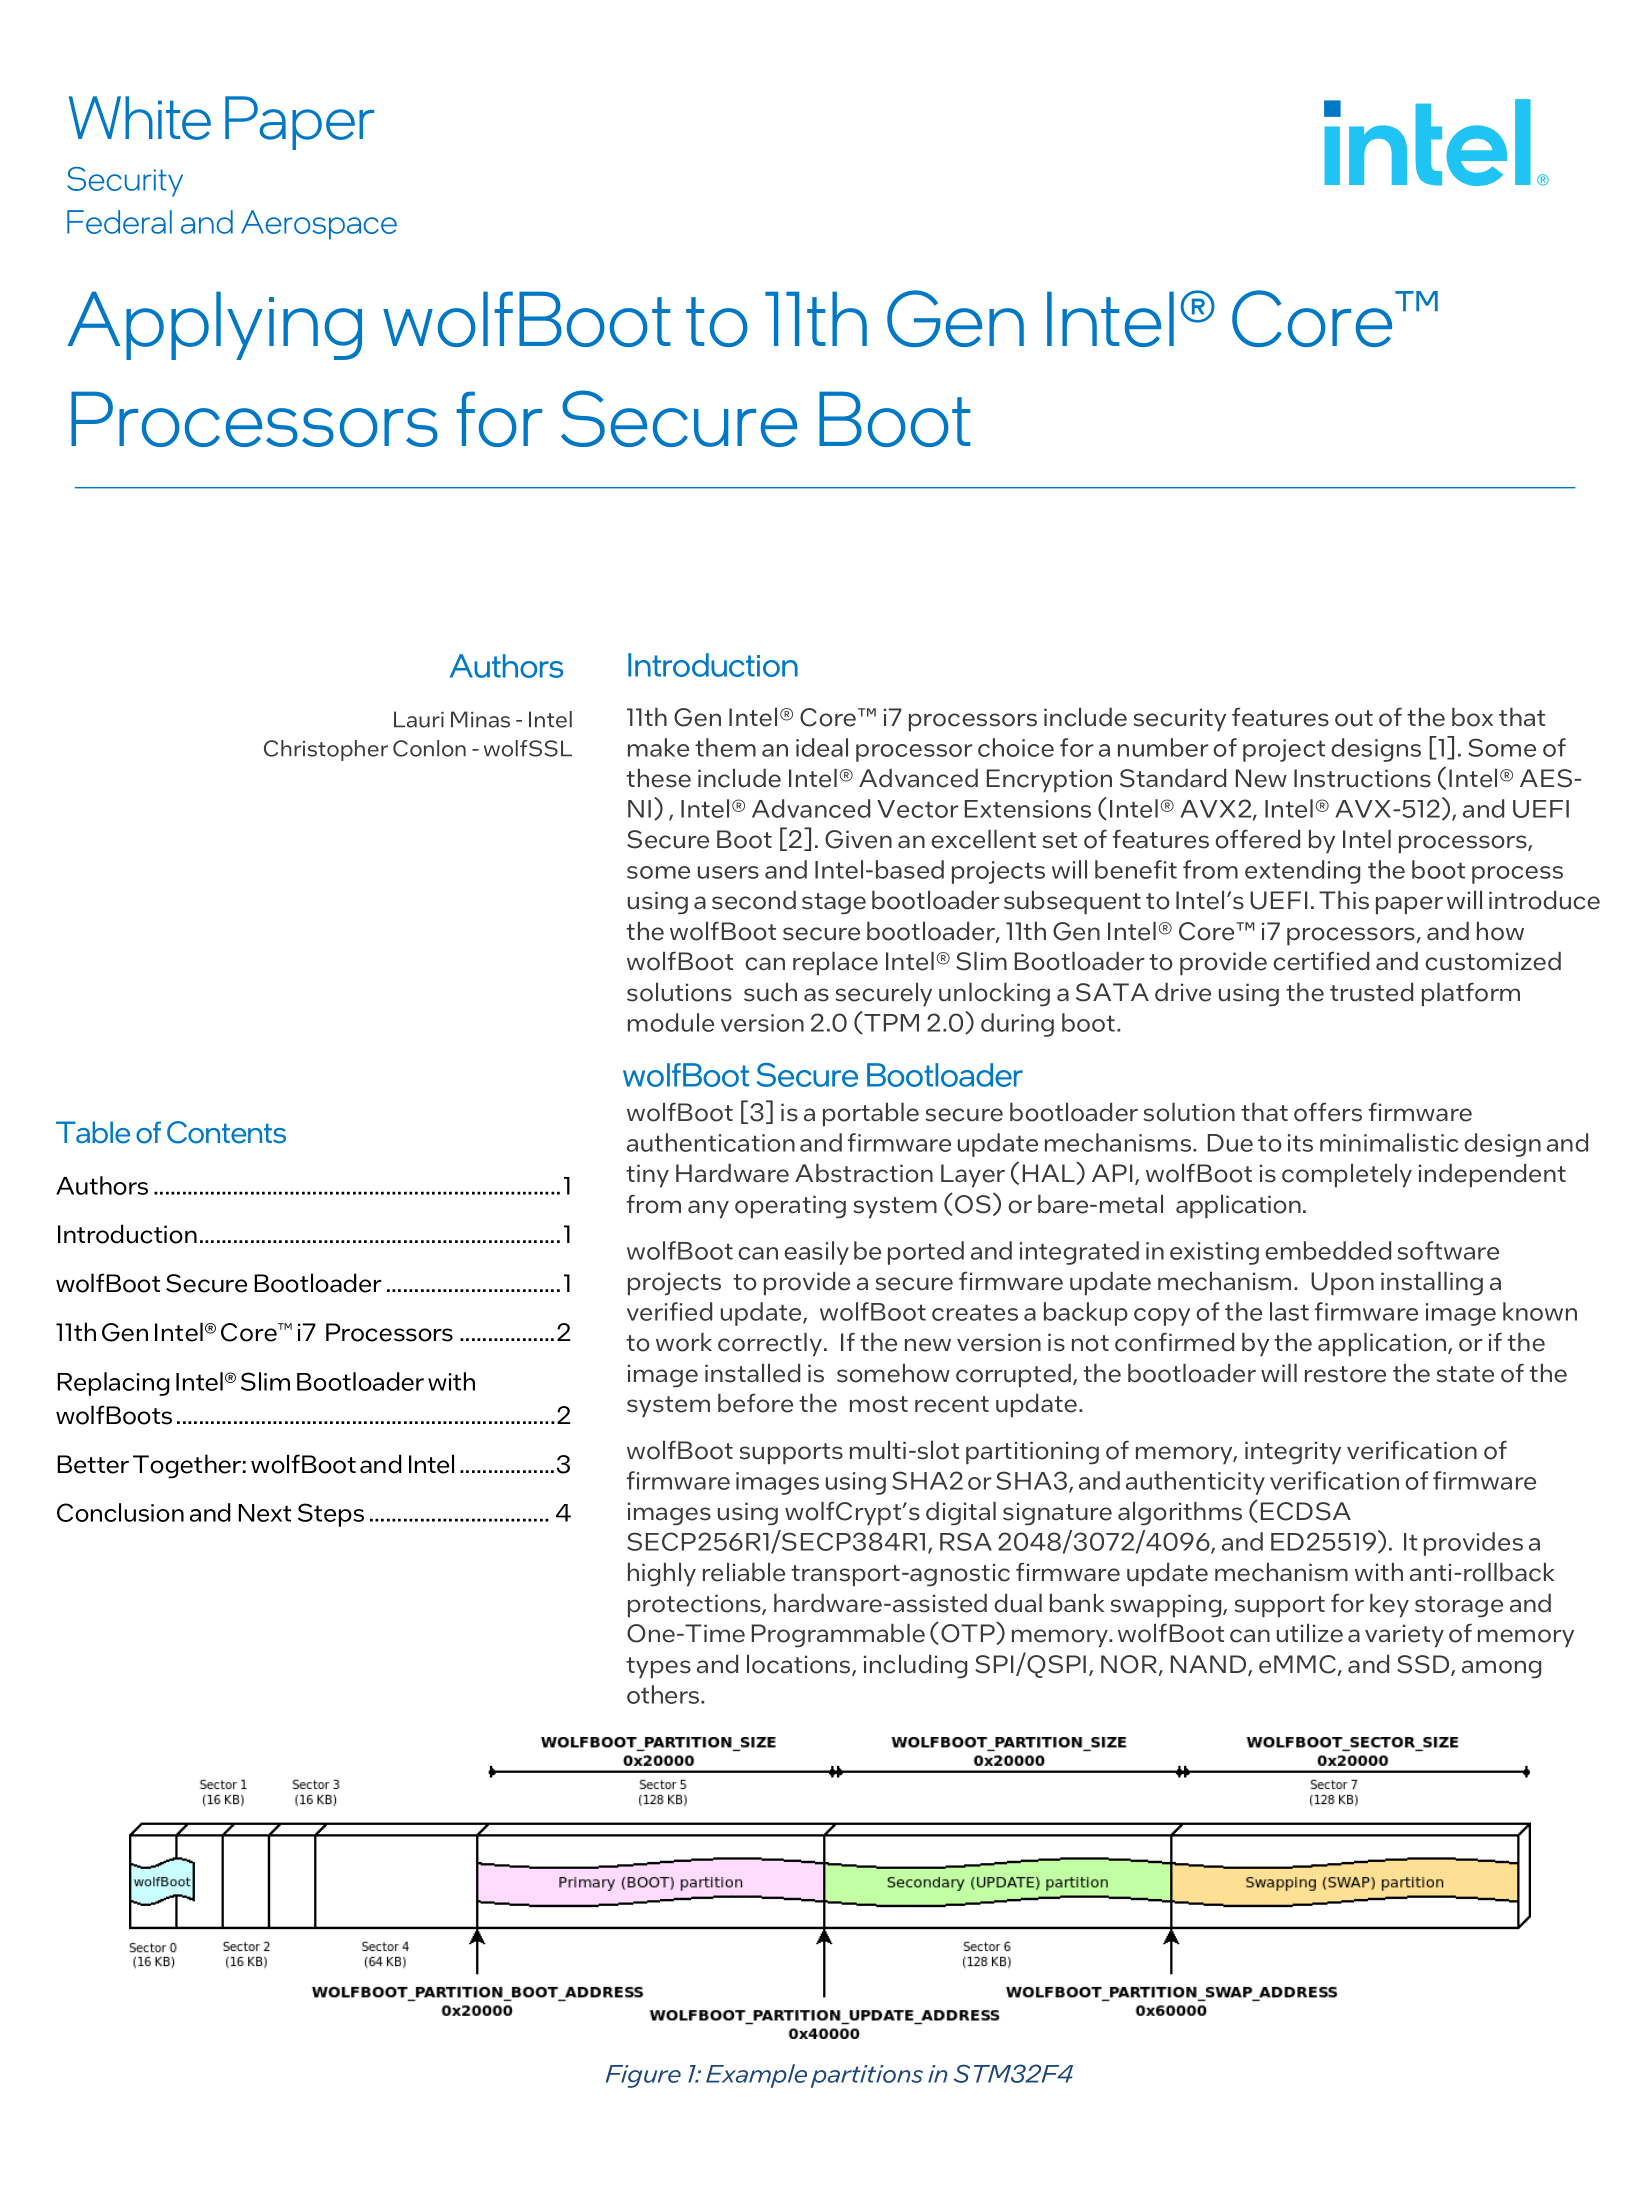 Intel-wolfSSL use case